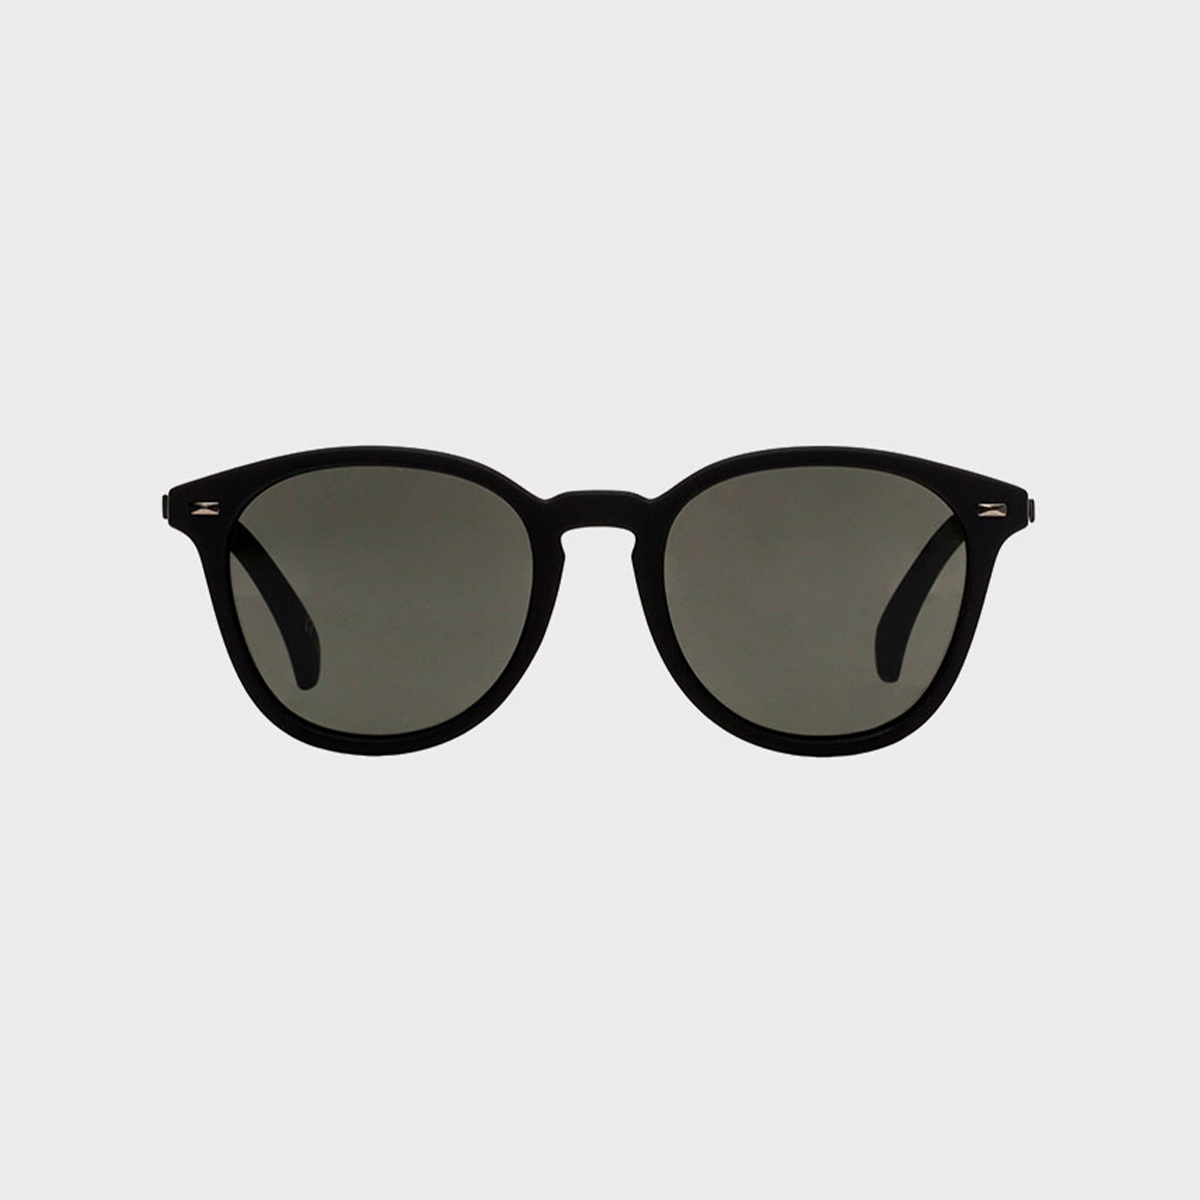 Shop Men's Aviator Sunglasses | Le Specs